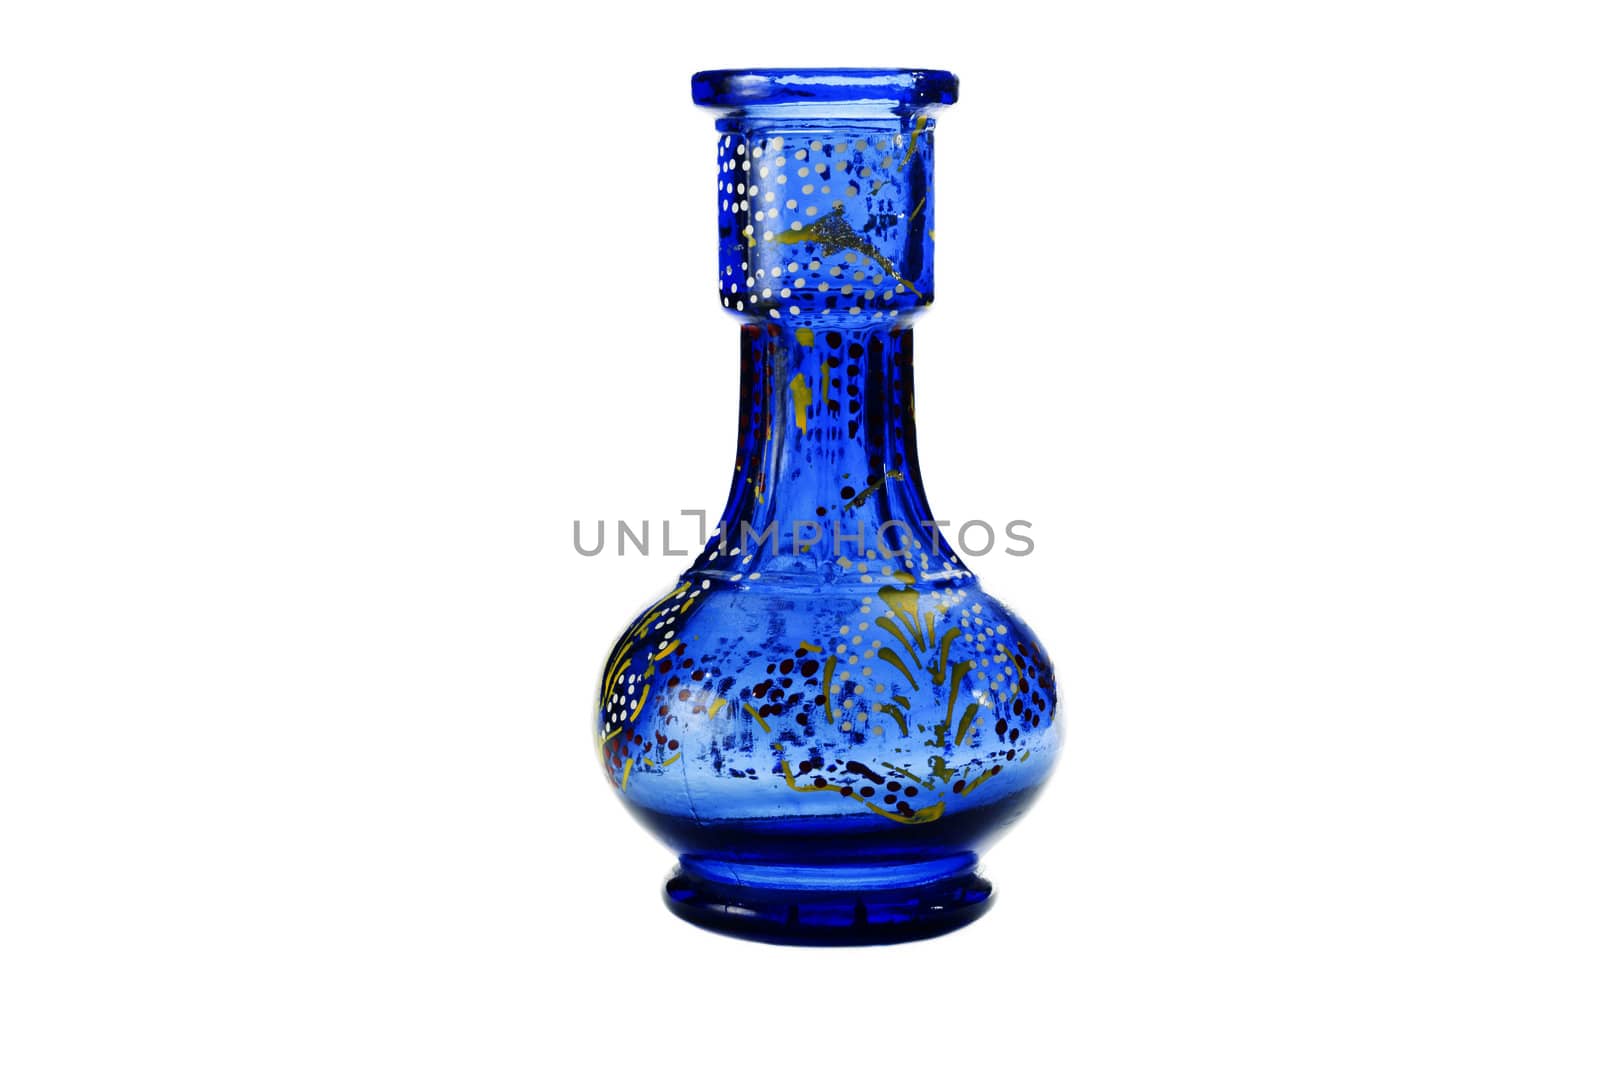 Isolated blue flower vase on a white background